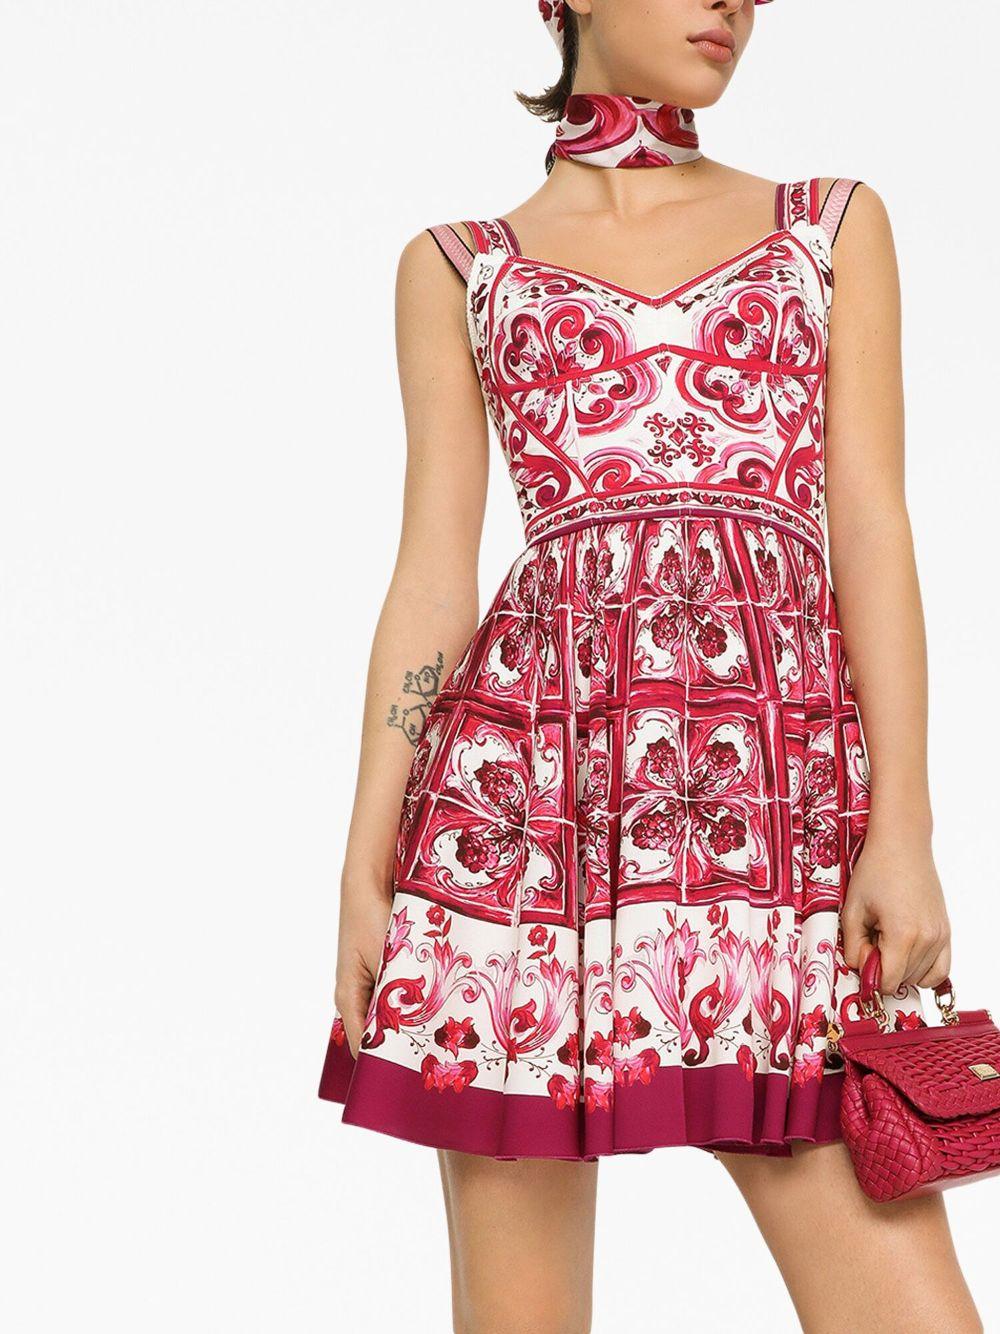 Dolce & Gabbana Majolica Print Dress, $1,995, farfetch.com